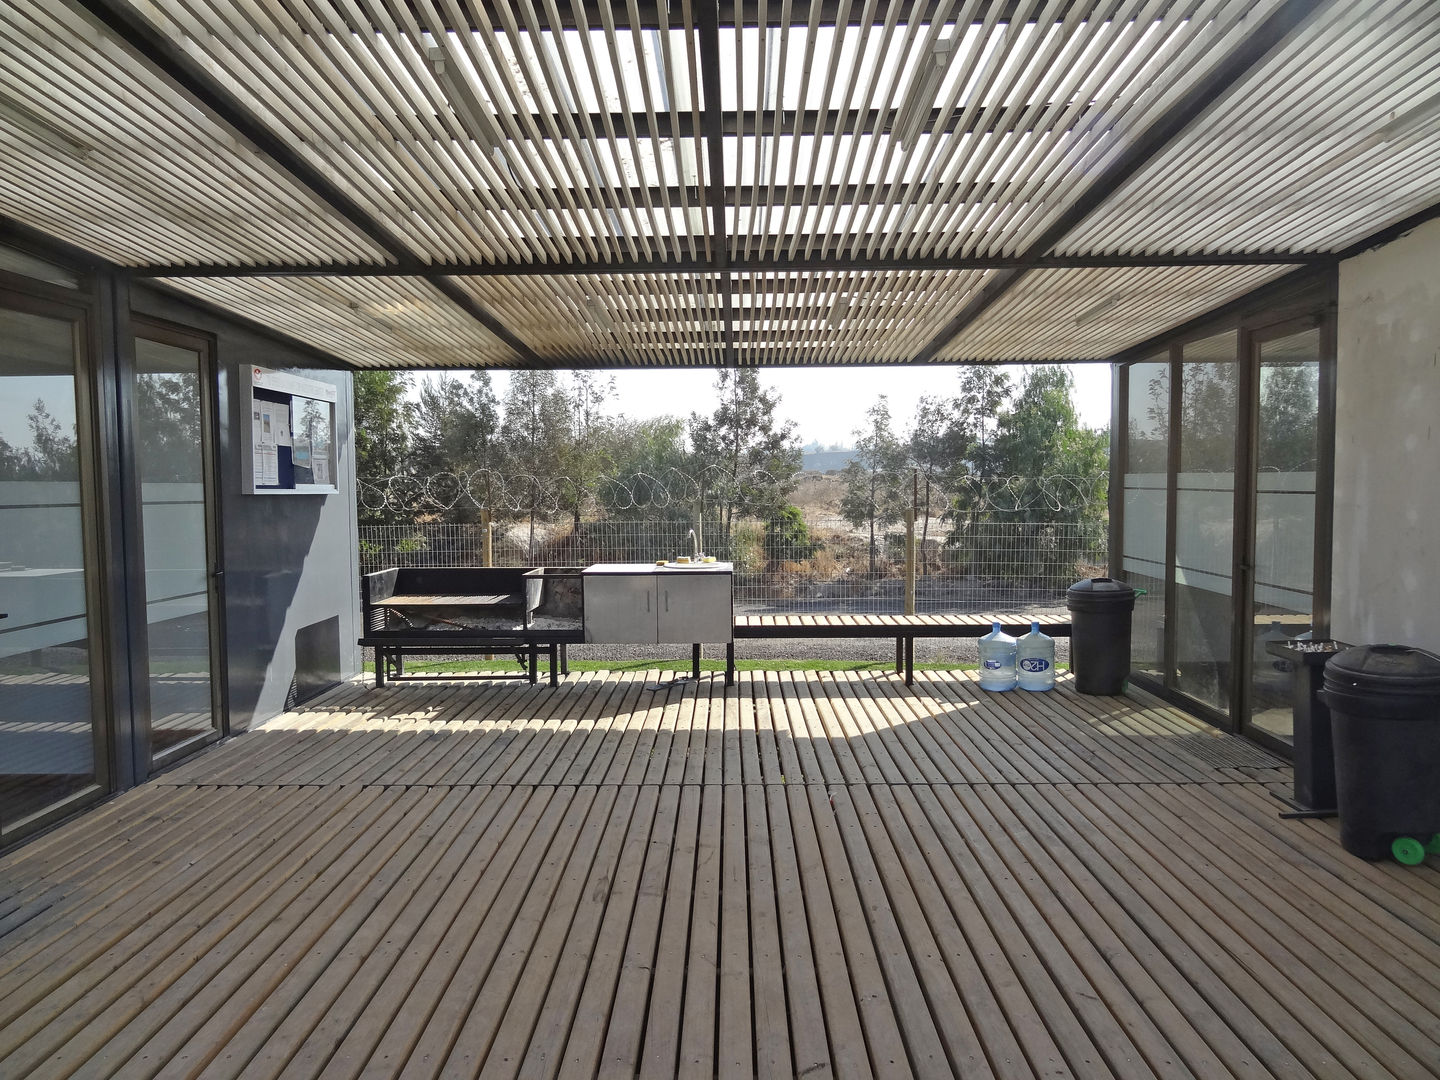 Oficinas Modulares Transportables, m2 estudio arquitectos - Santiago m2 estudio arquitectos - Santiago Escaleras